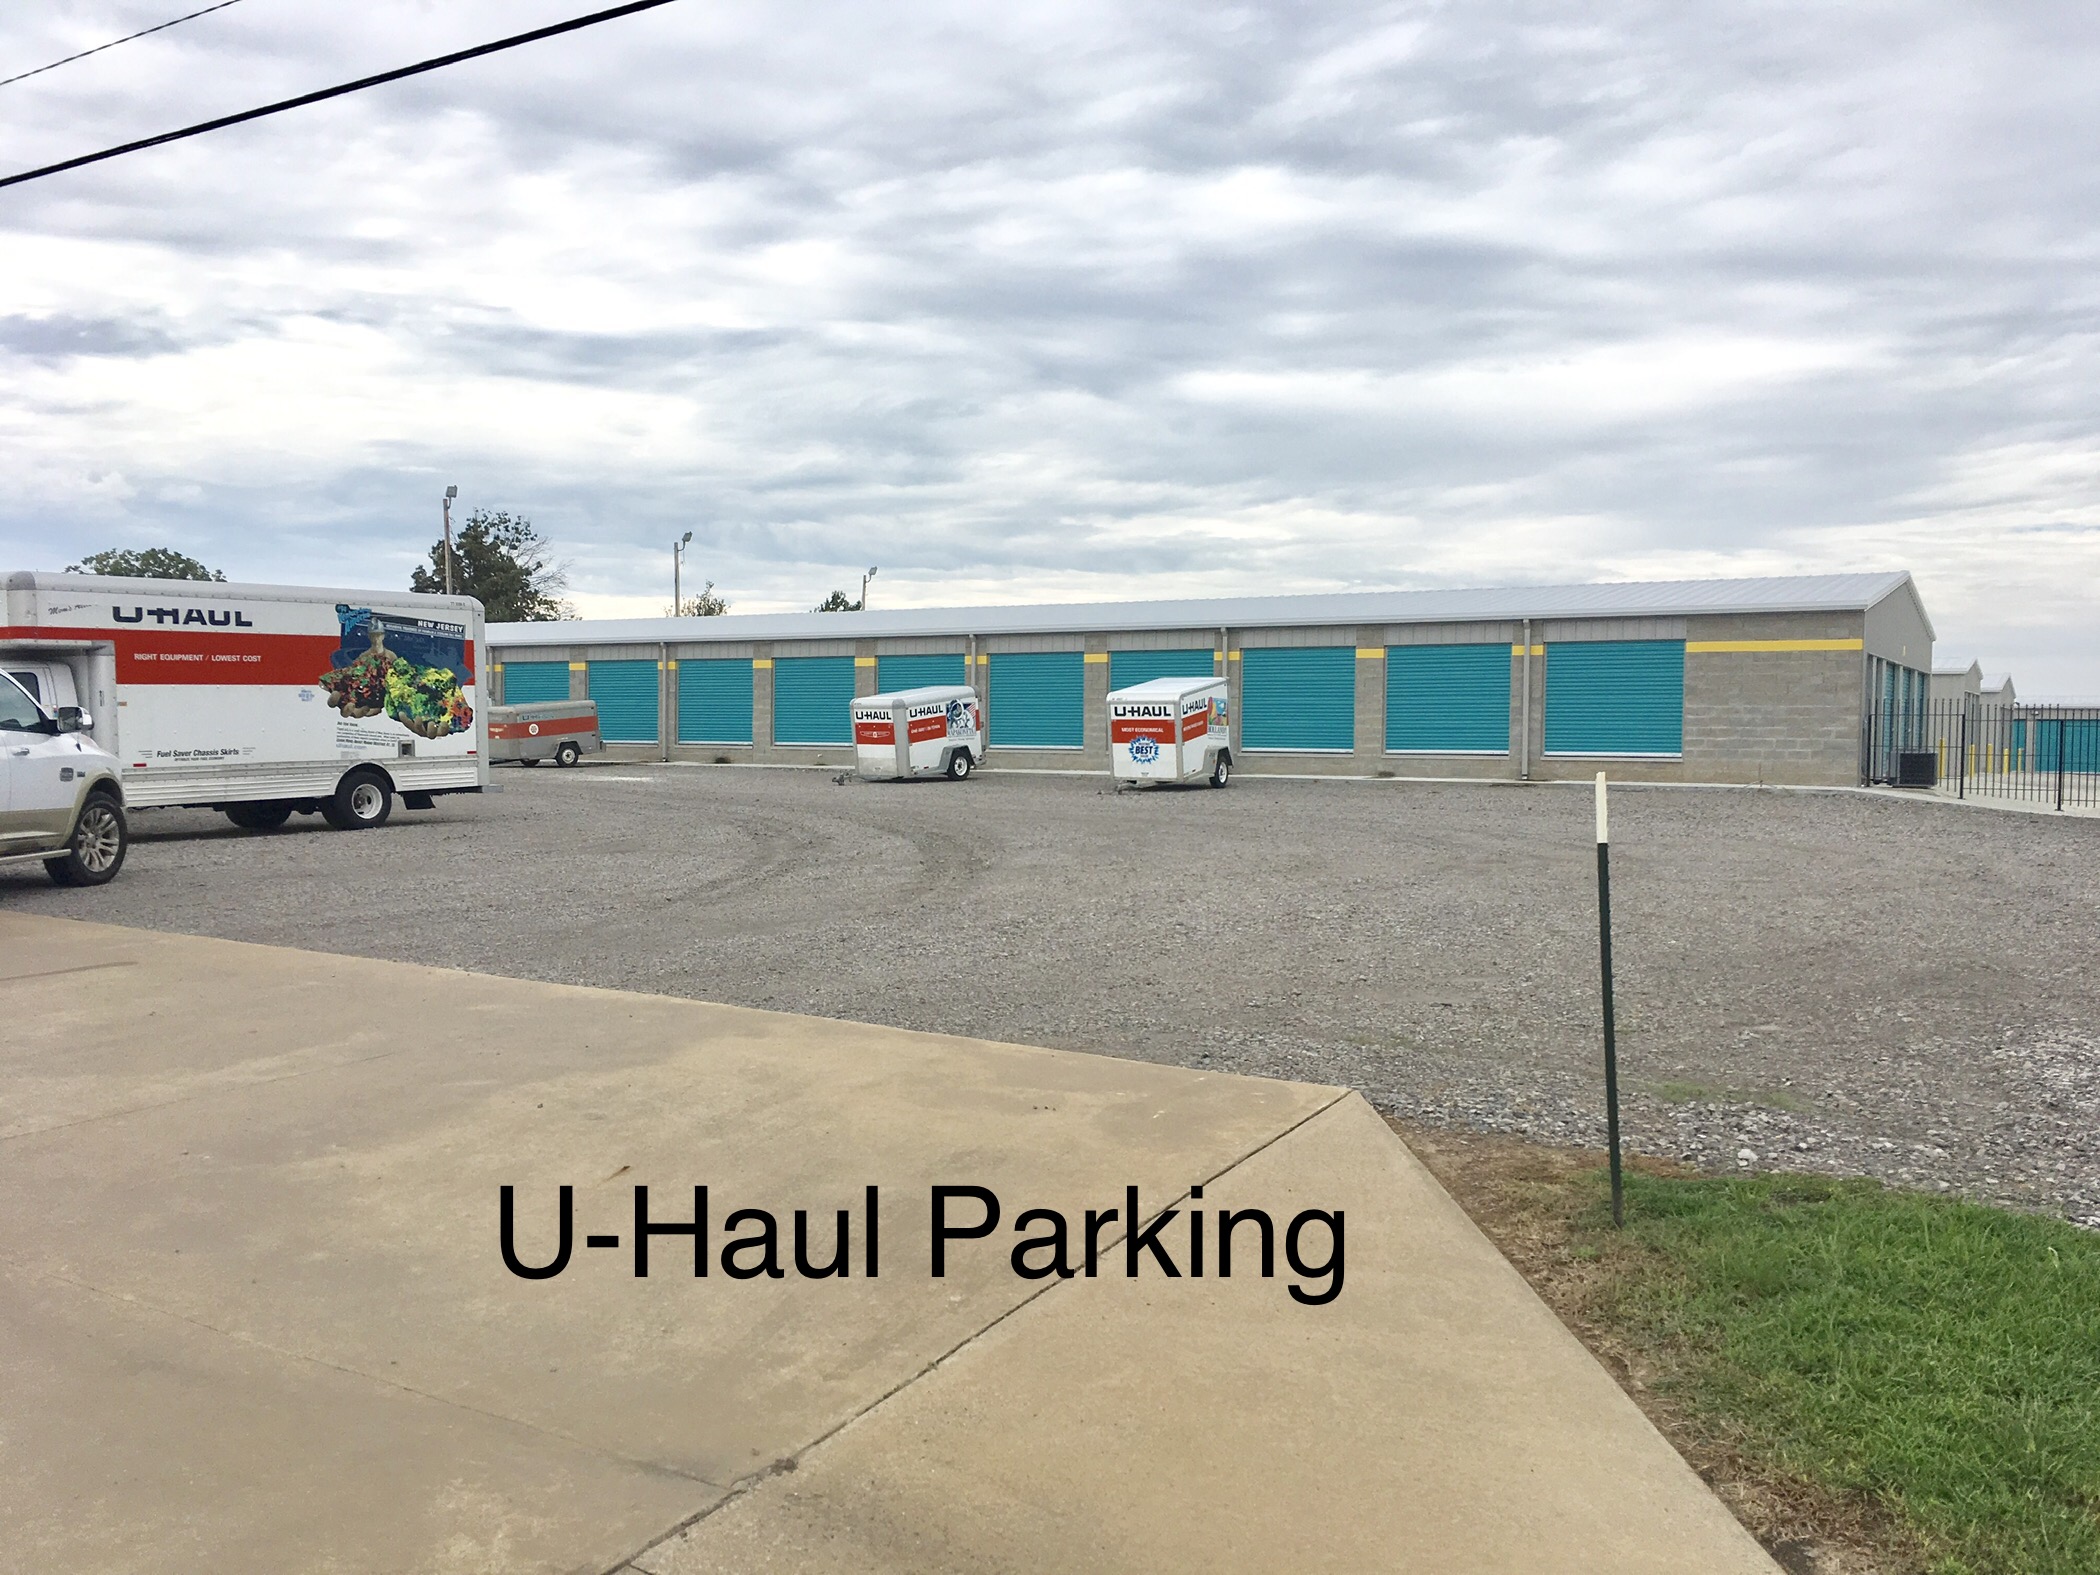 U-haul parking